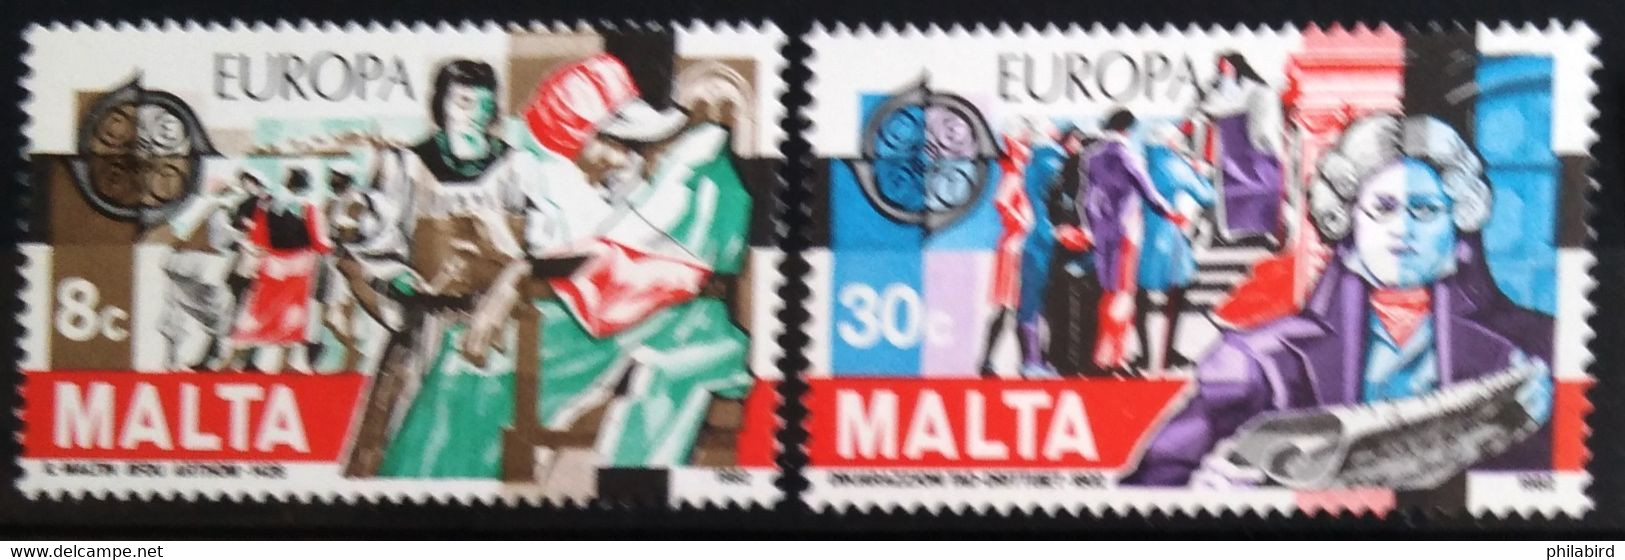 EUROPA 1982 - MALTE                   N° 649/650                       NEUF** - 1982